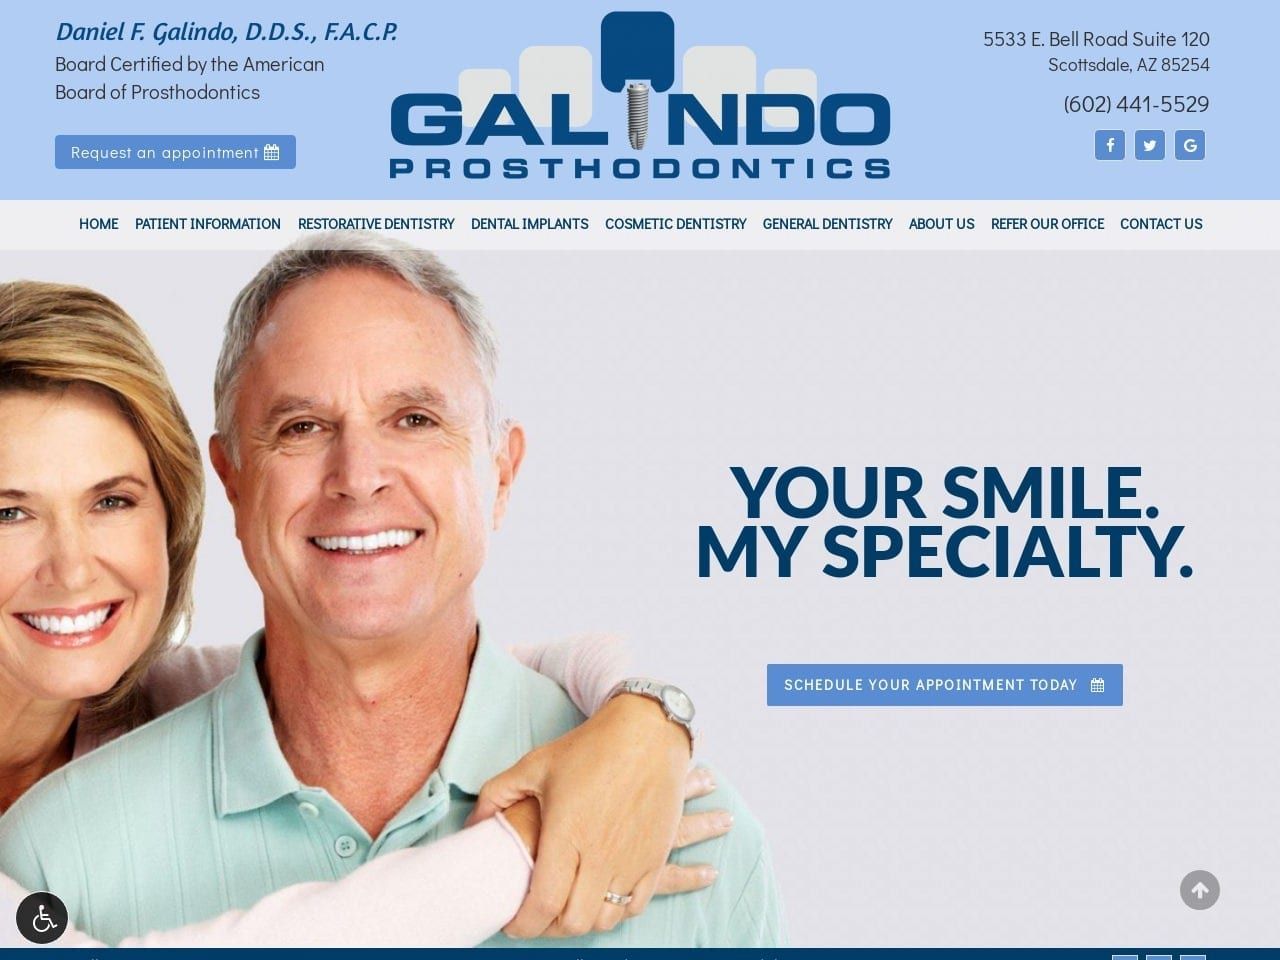 Daniel F. Galindo D.D.S. P.C. Website Screenshot from galindoprosthodontics.com